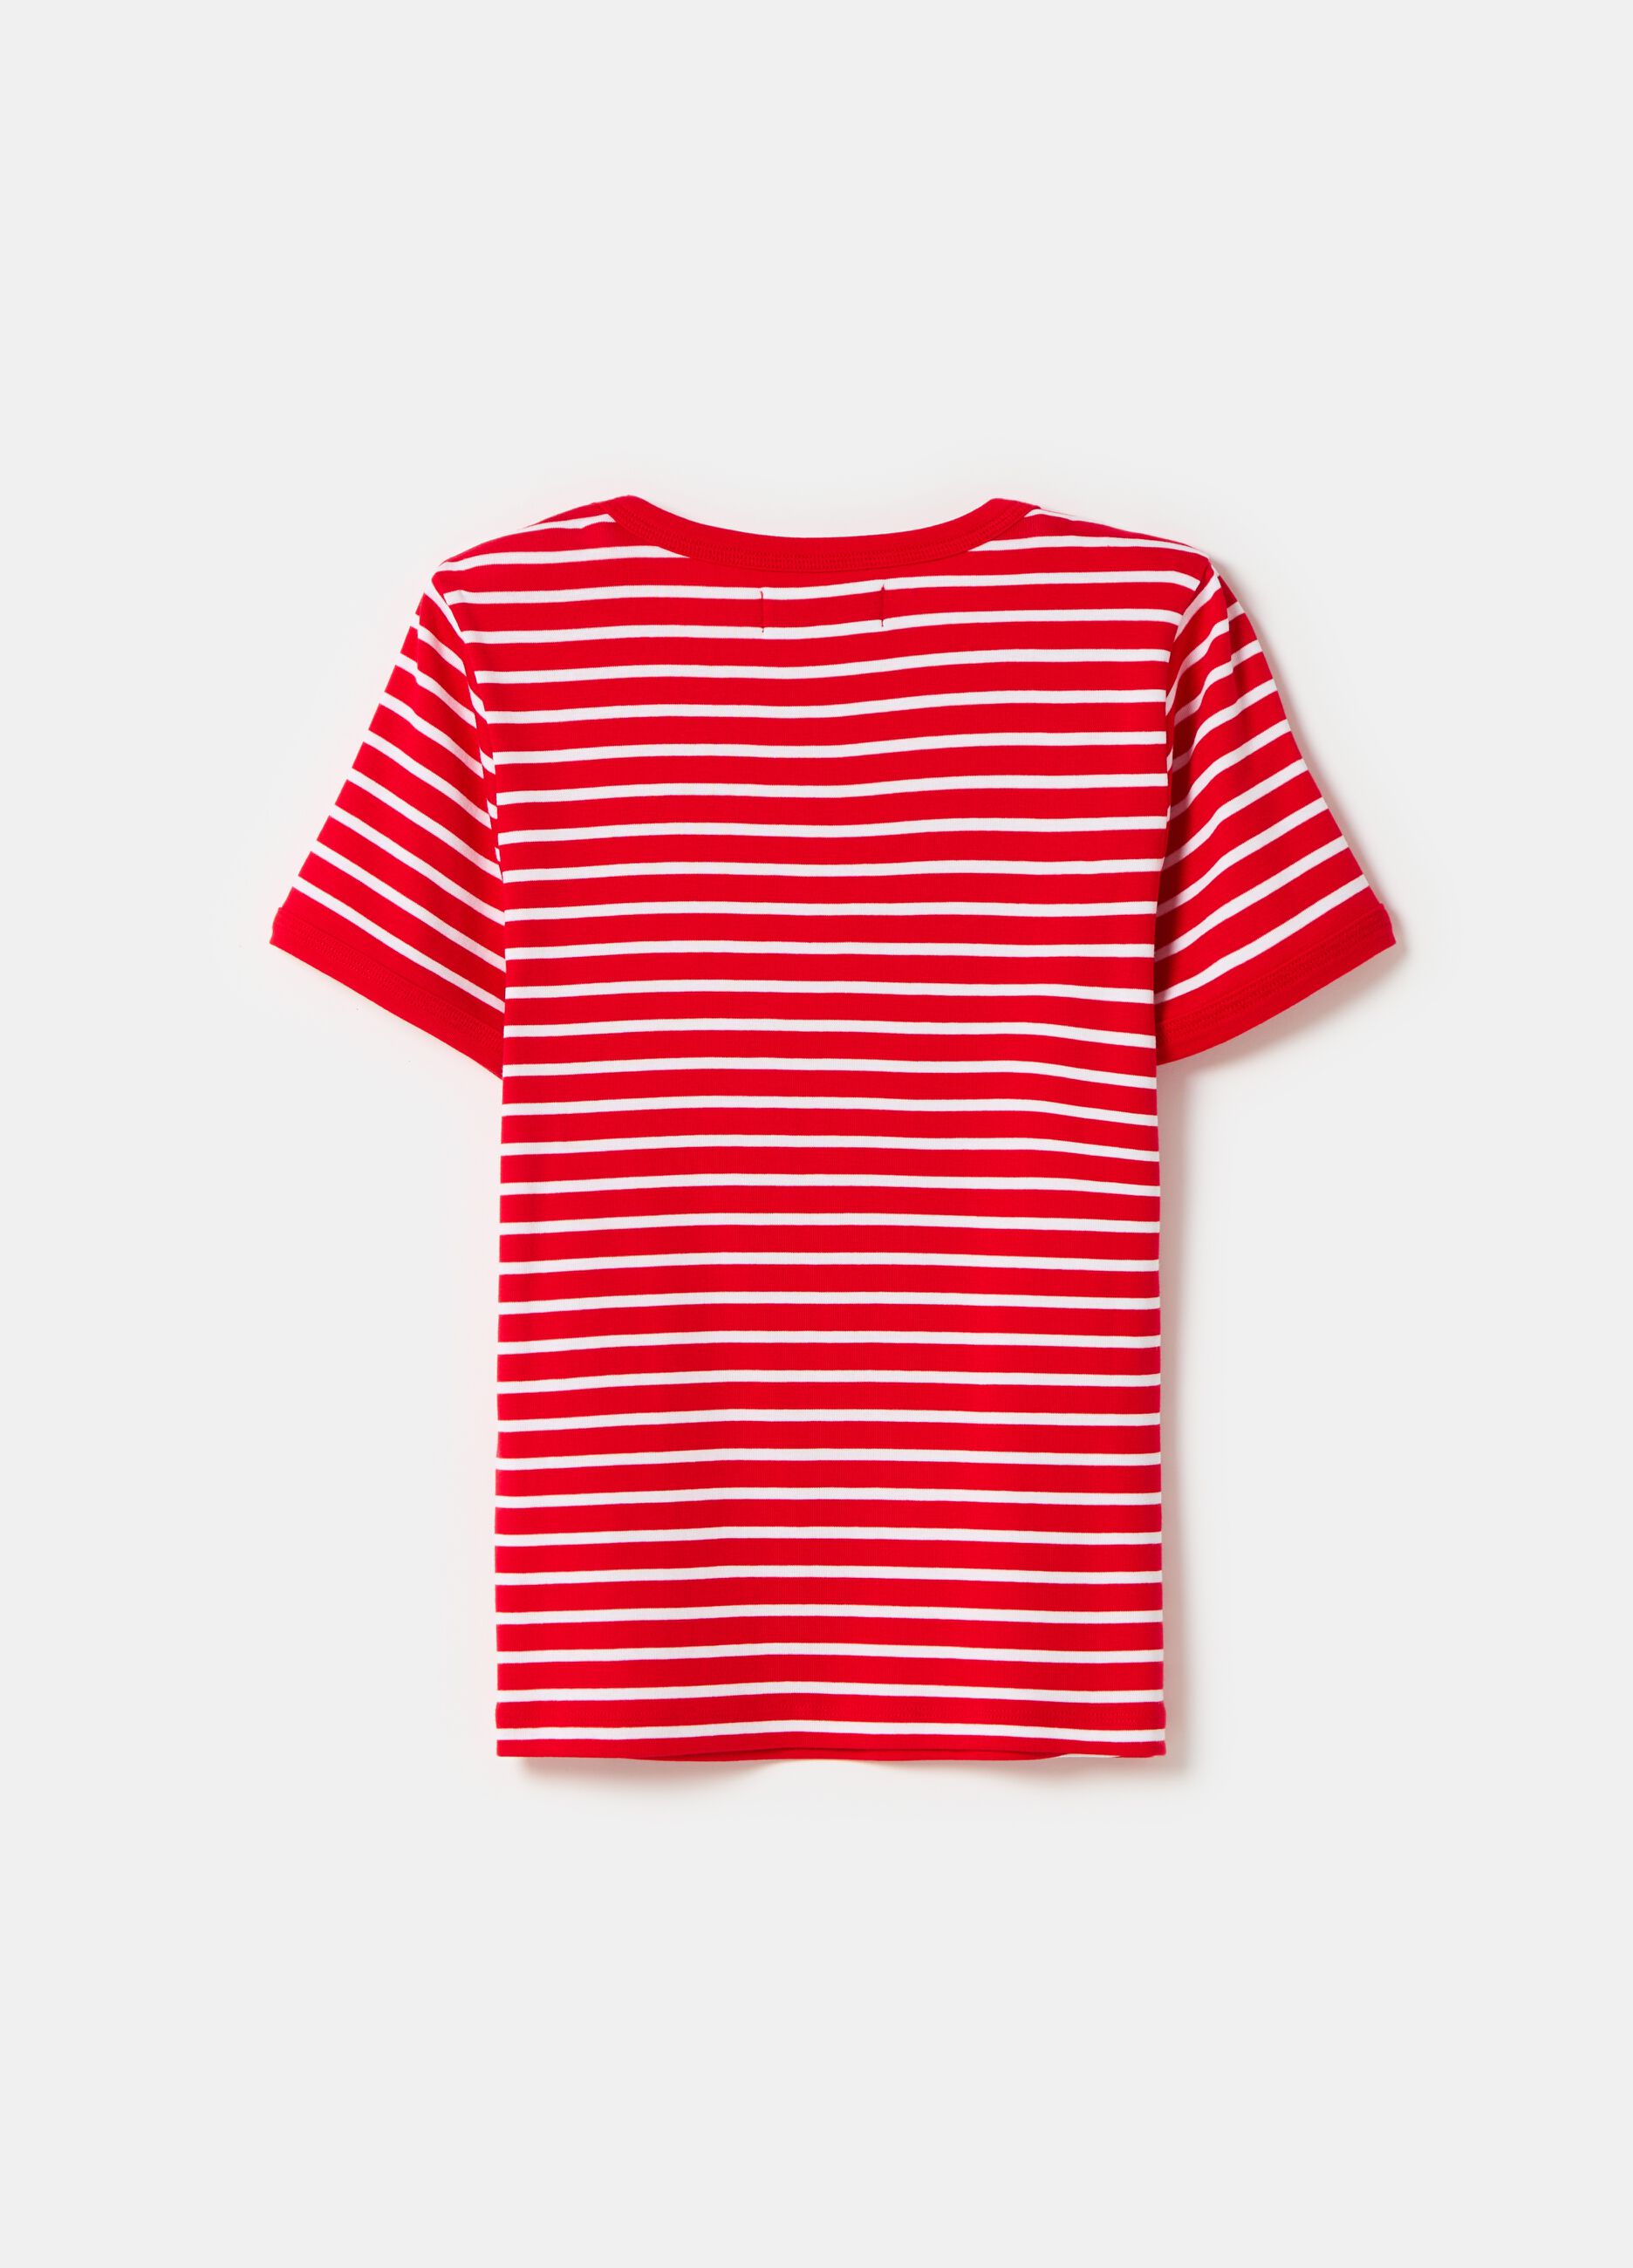 Striped T-shirt in stretch cotton